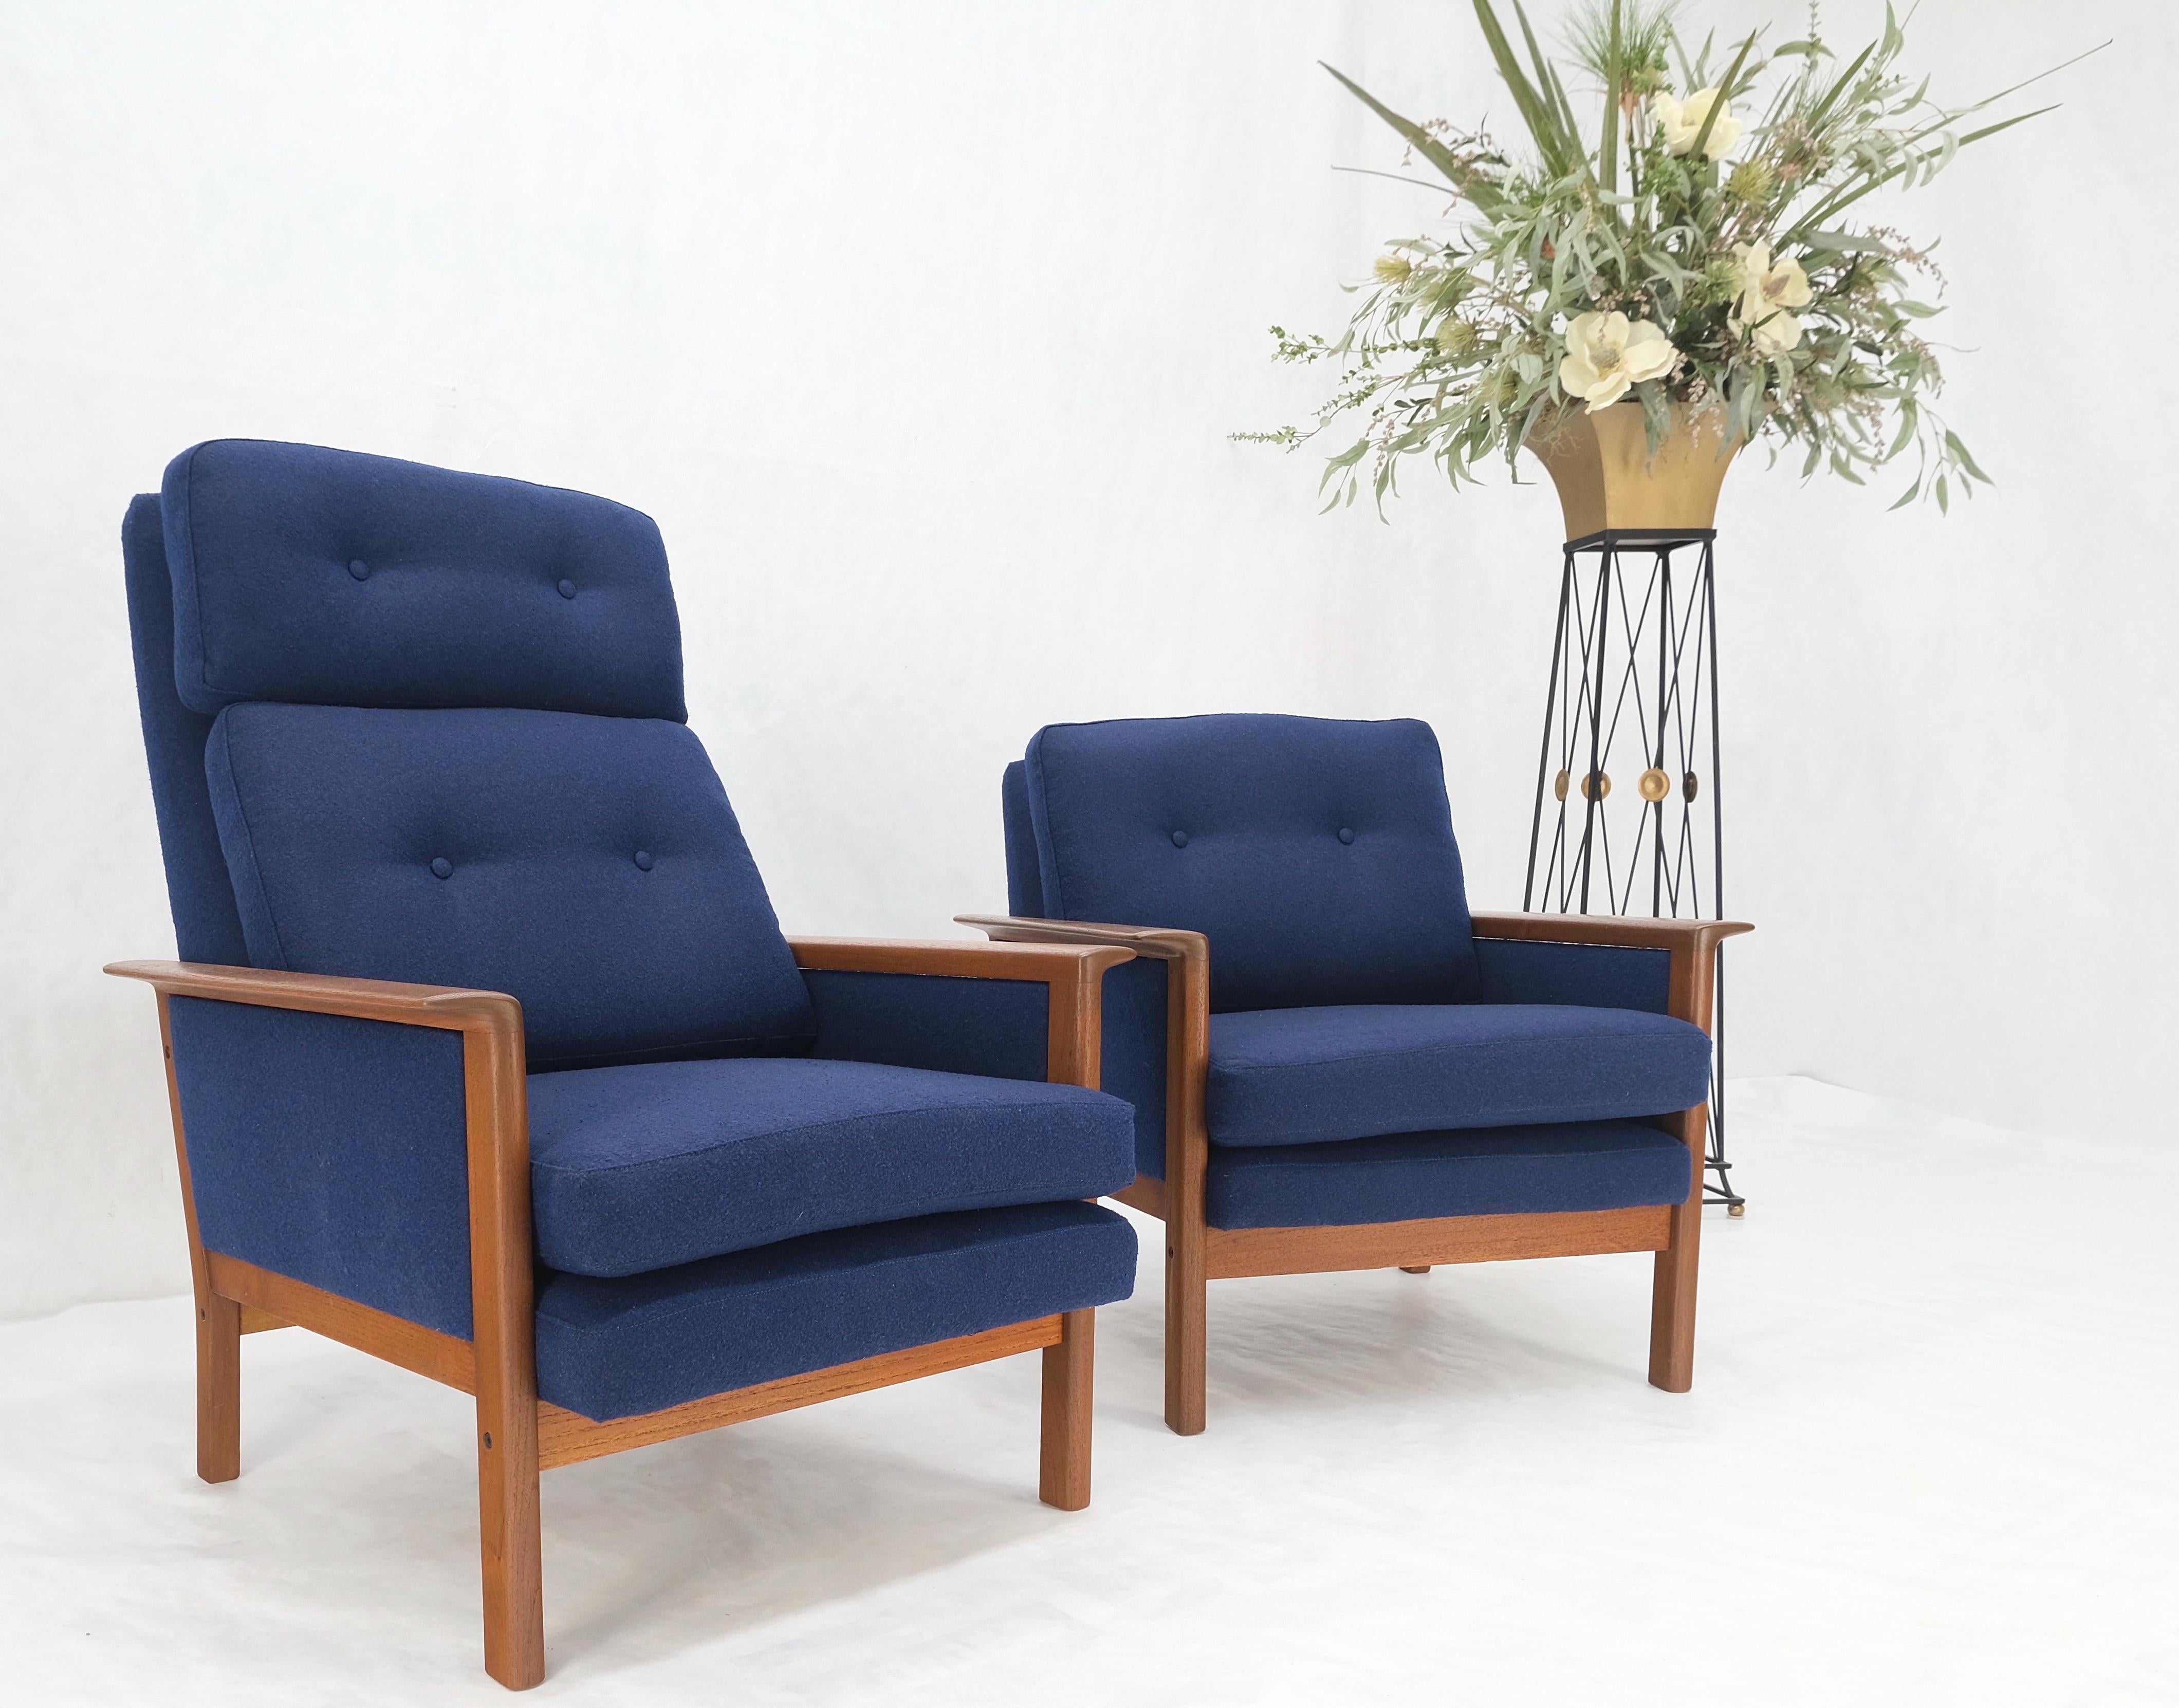 Danish Mid-Century Modern Teak Frames New Wool Upholstery Lounge Chairs Refinish For Sale 5